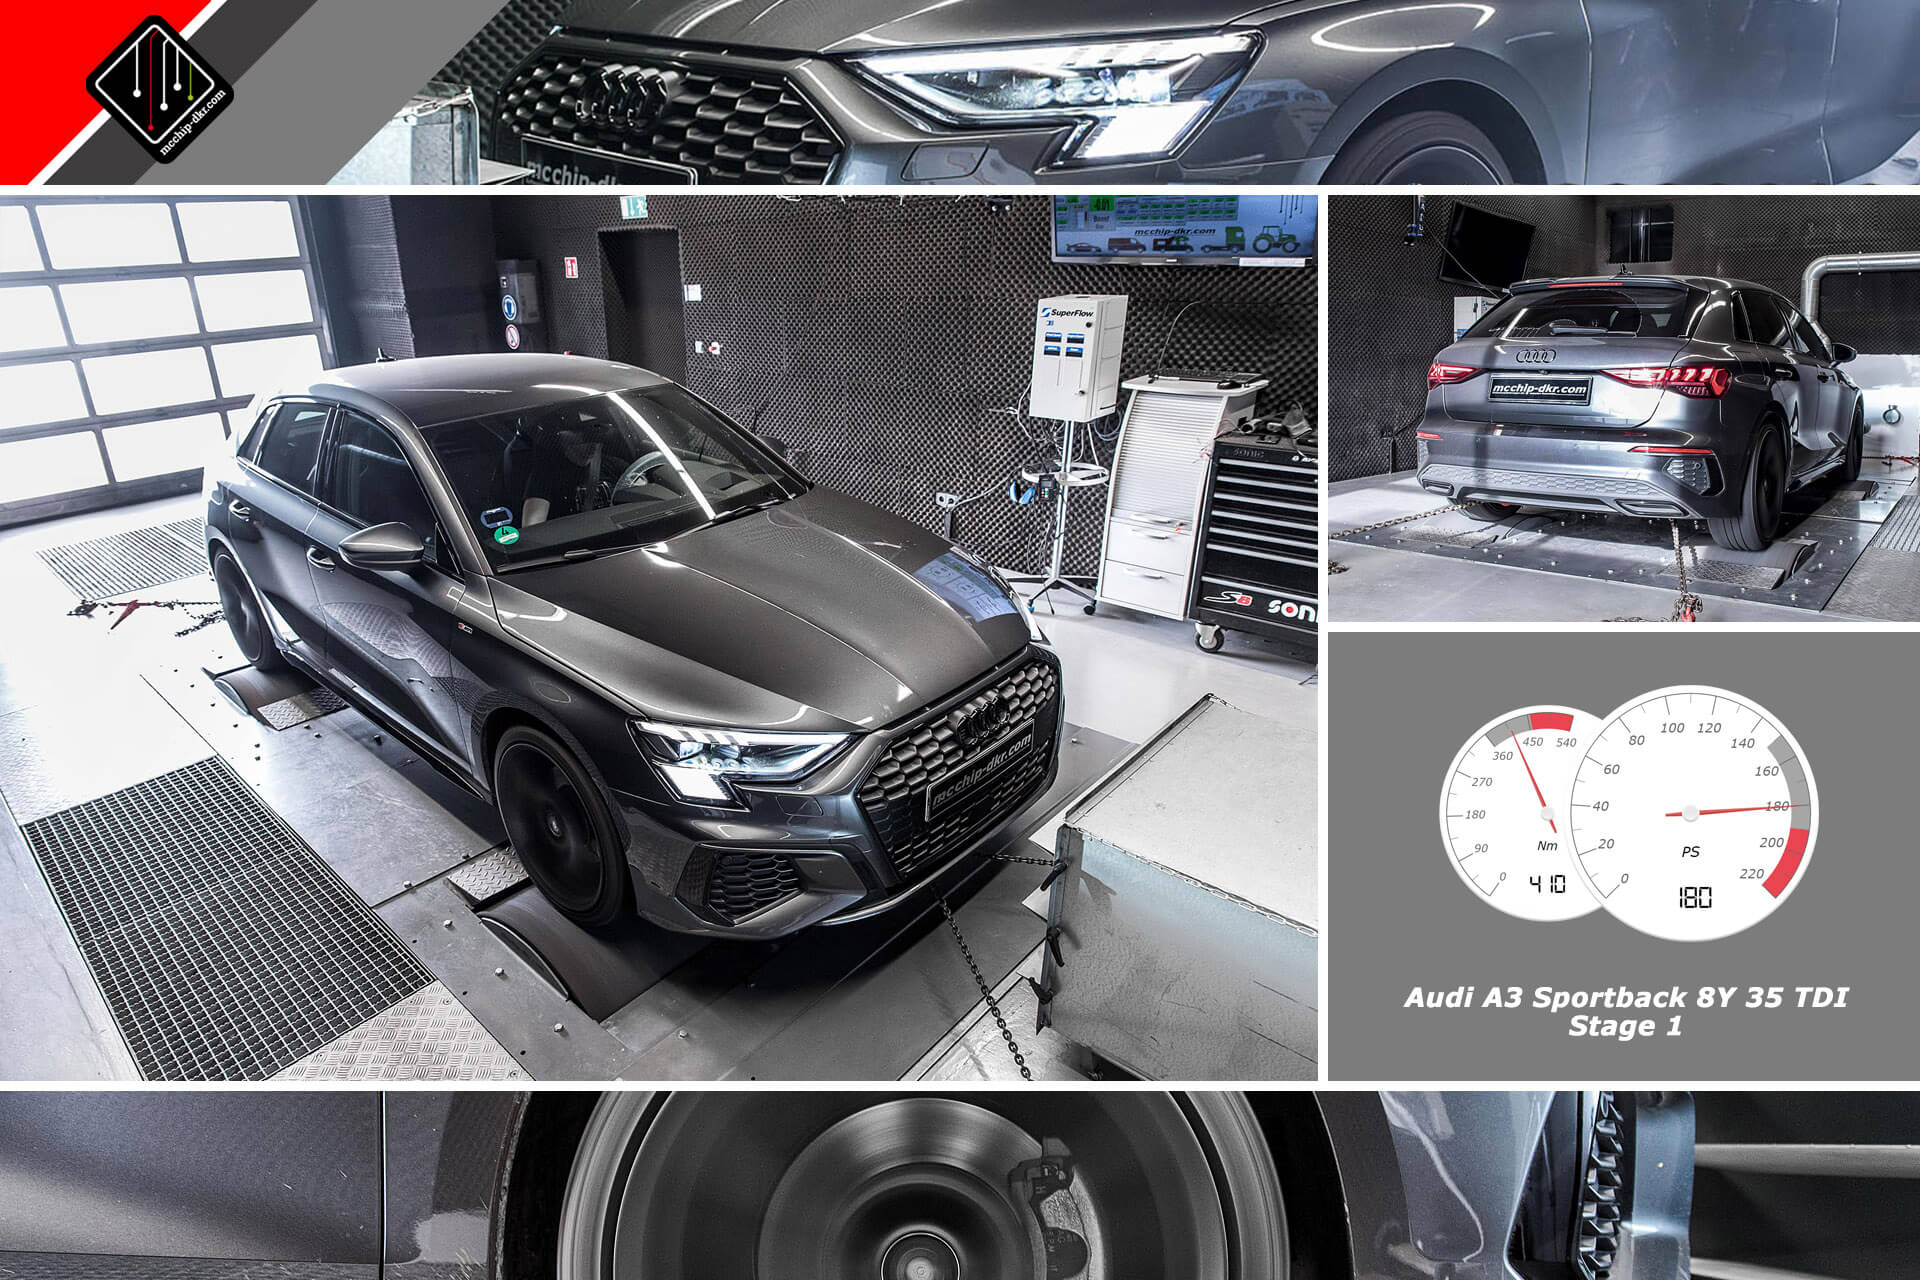 https://mcchip-dkr.com/images/content/news-2021/Chiptuning_News_Audi_A3_35_TDI.jpg